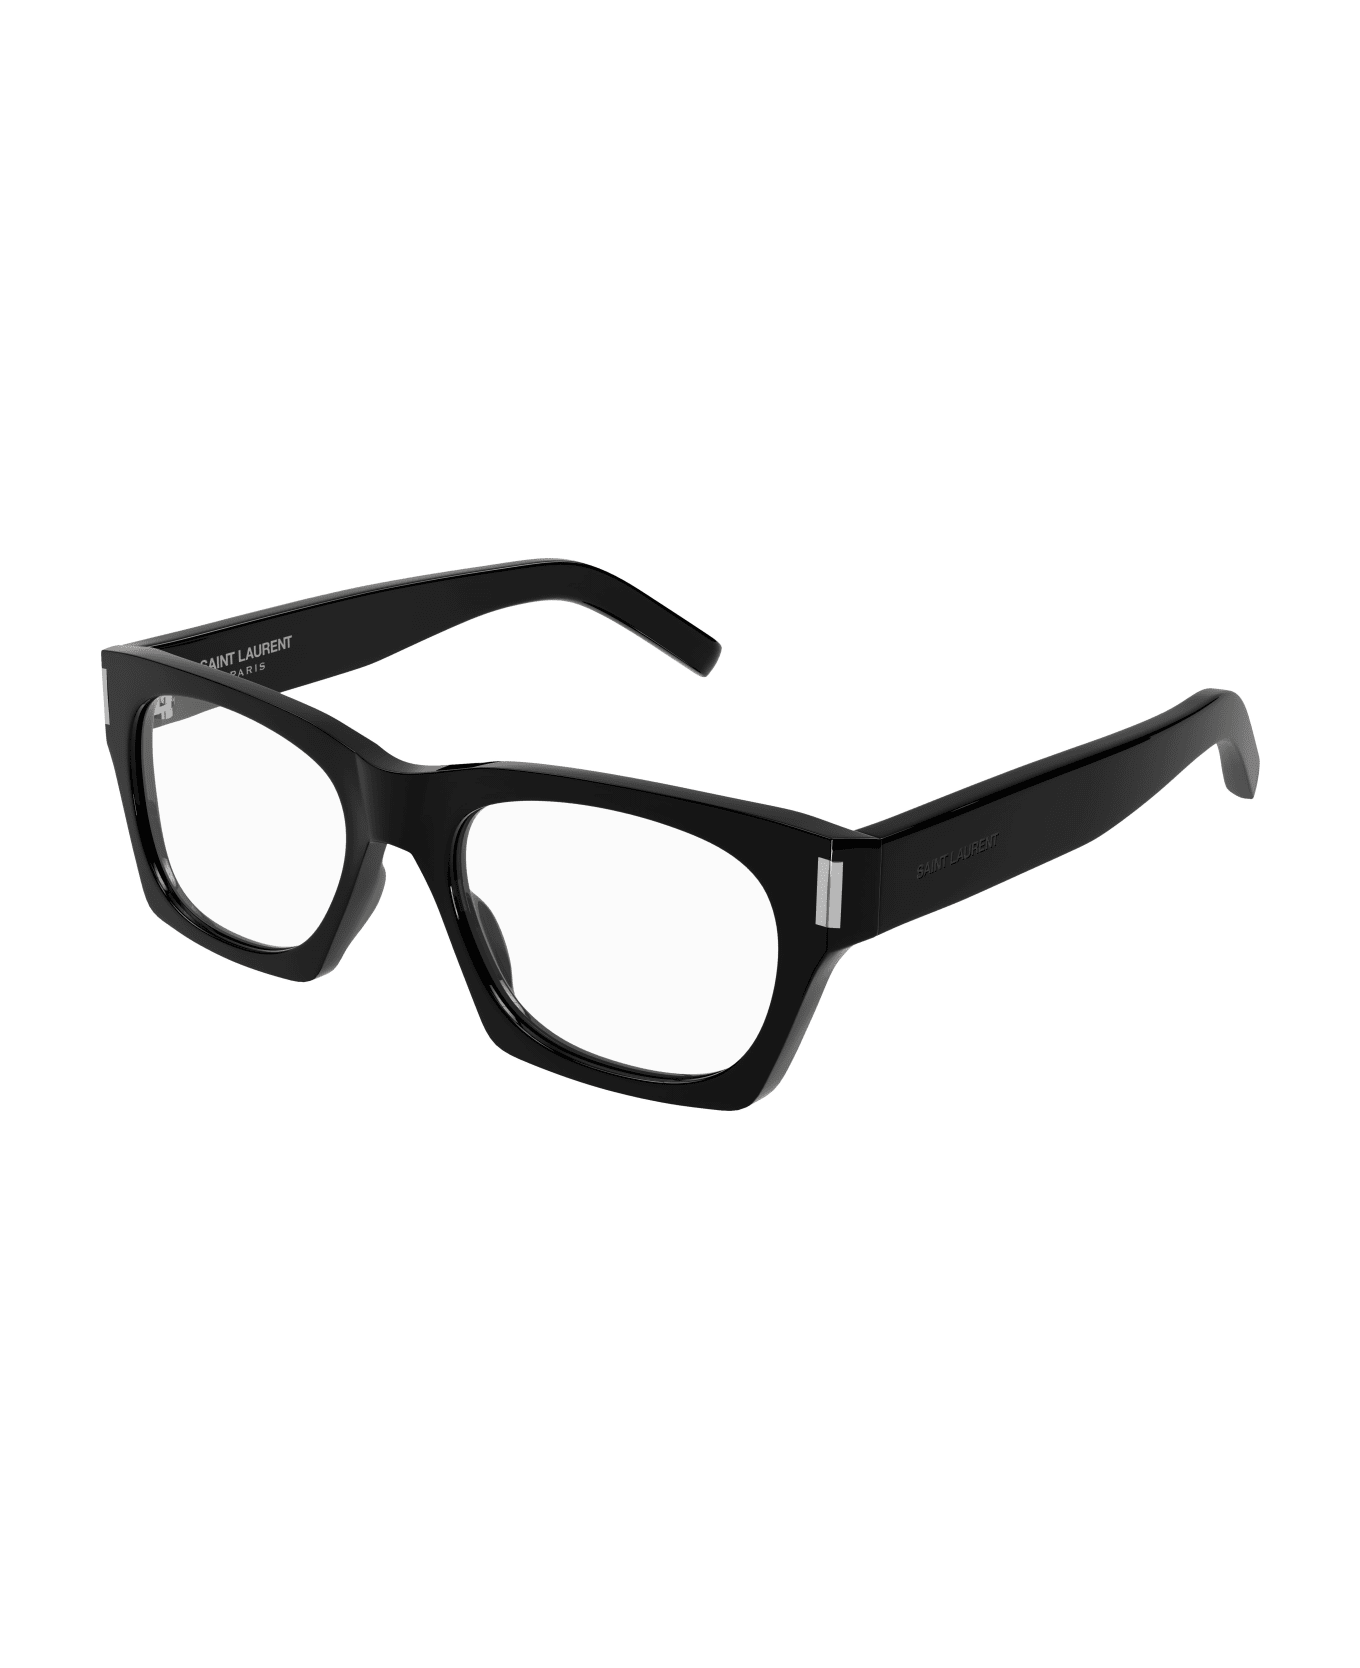 Saint Laurent Eyewear Sl 402 Opt Eyewear - 001 black black transpare